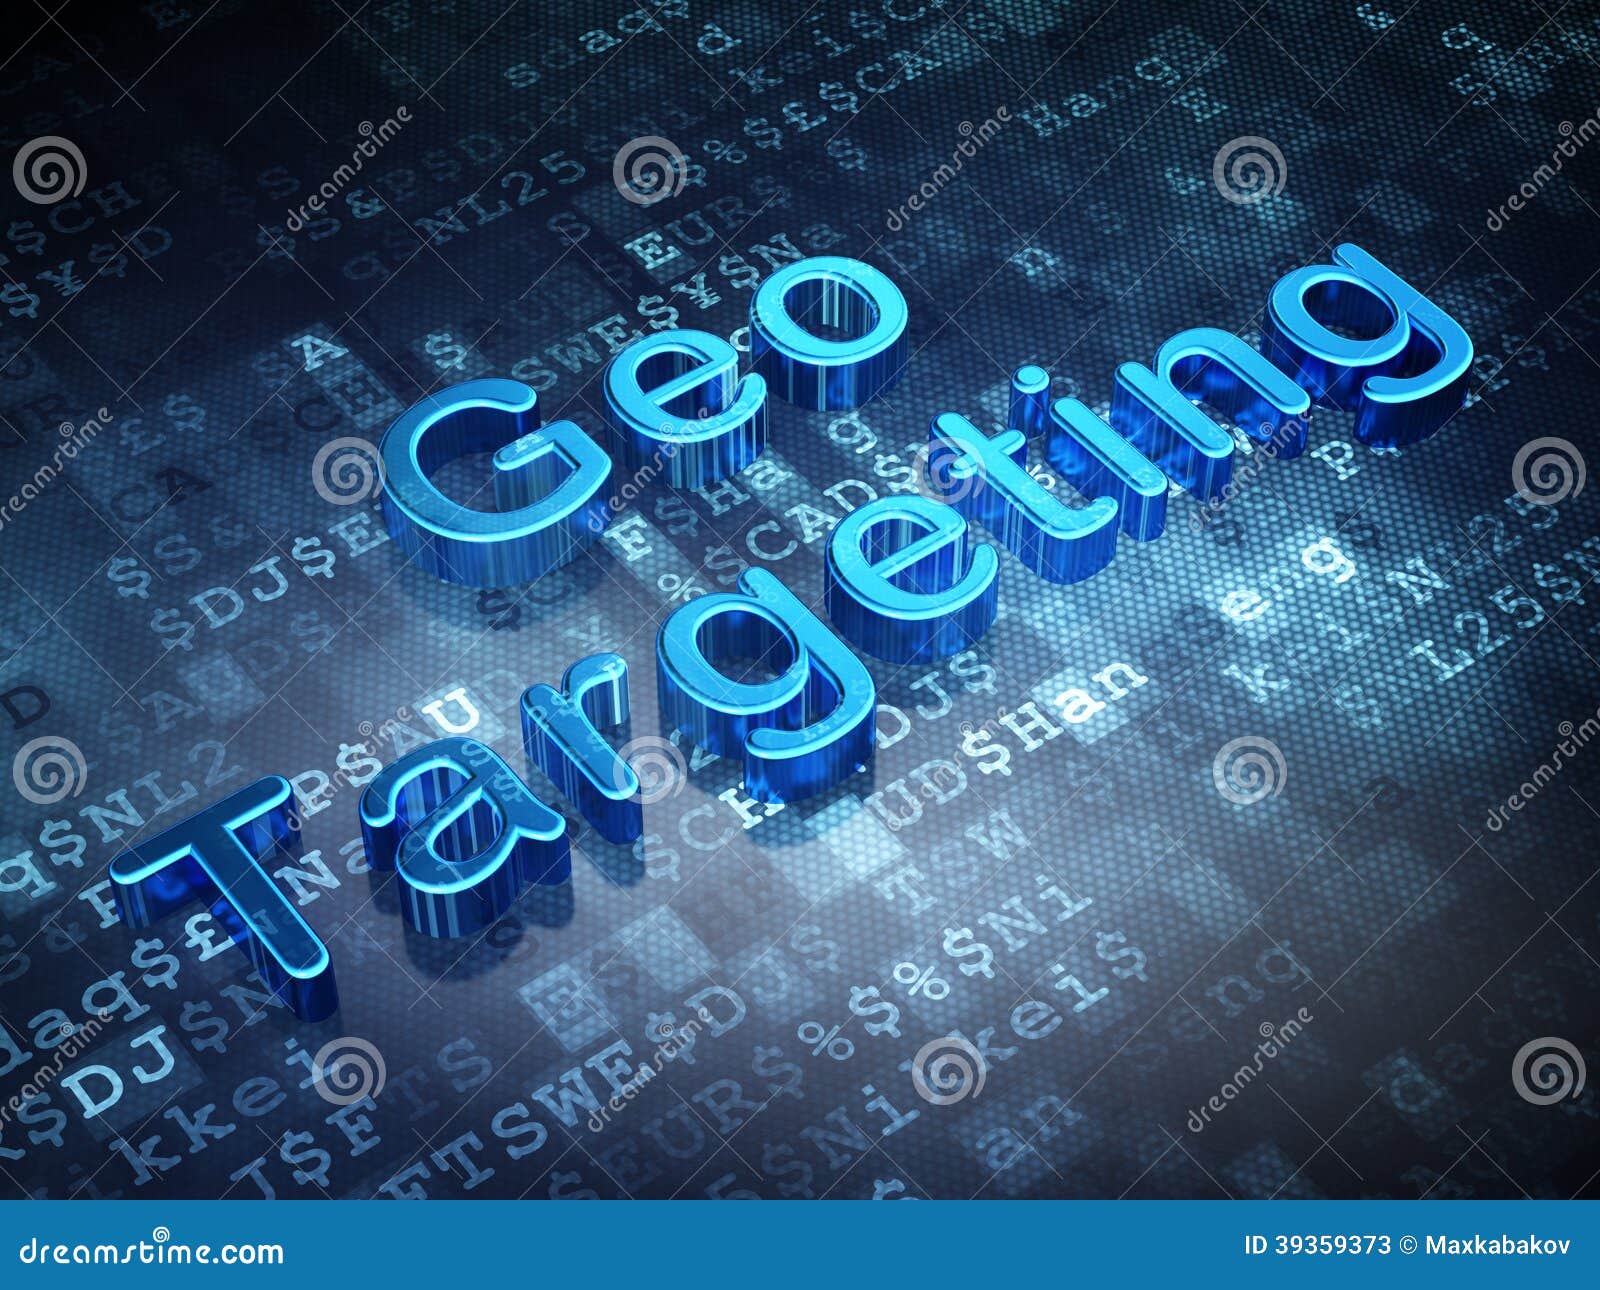 business concept: blue geo targeting on digital background